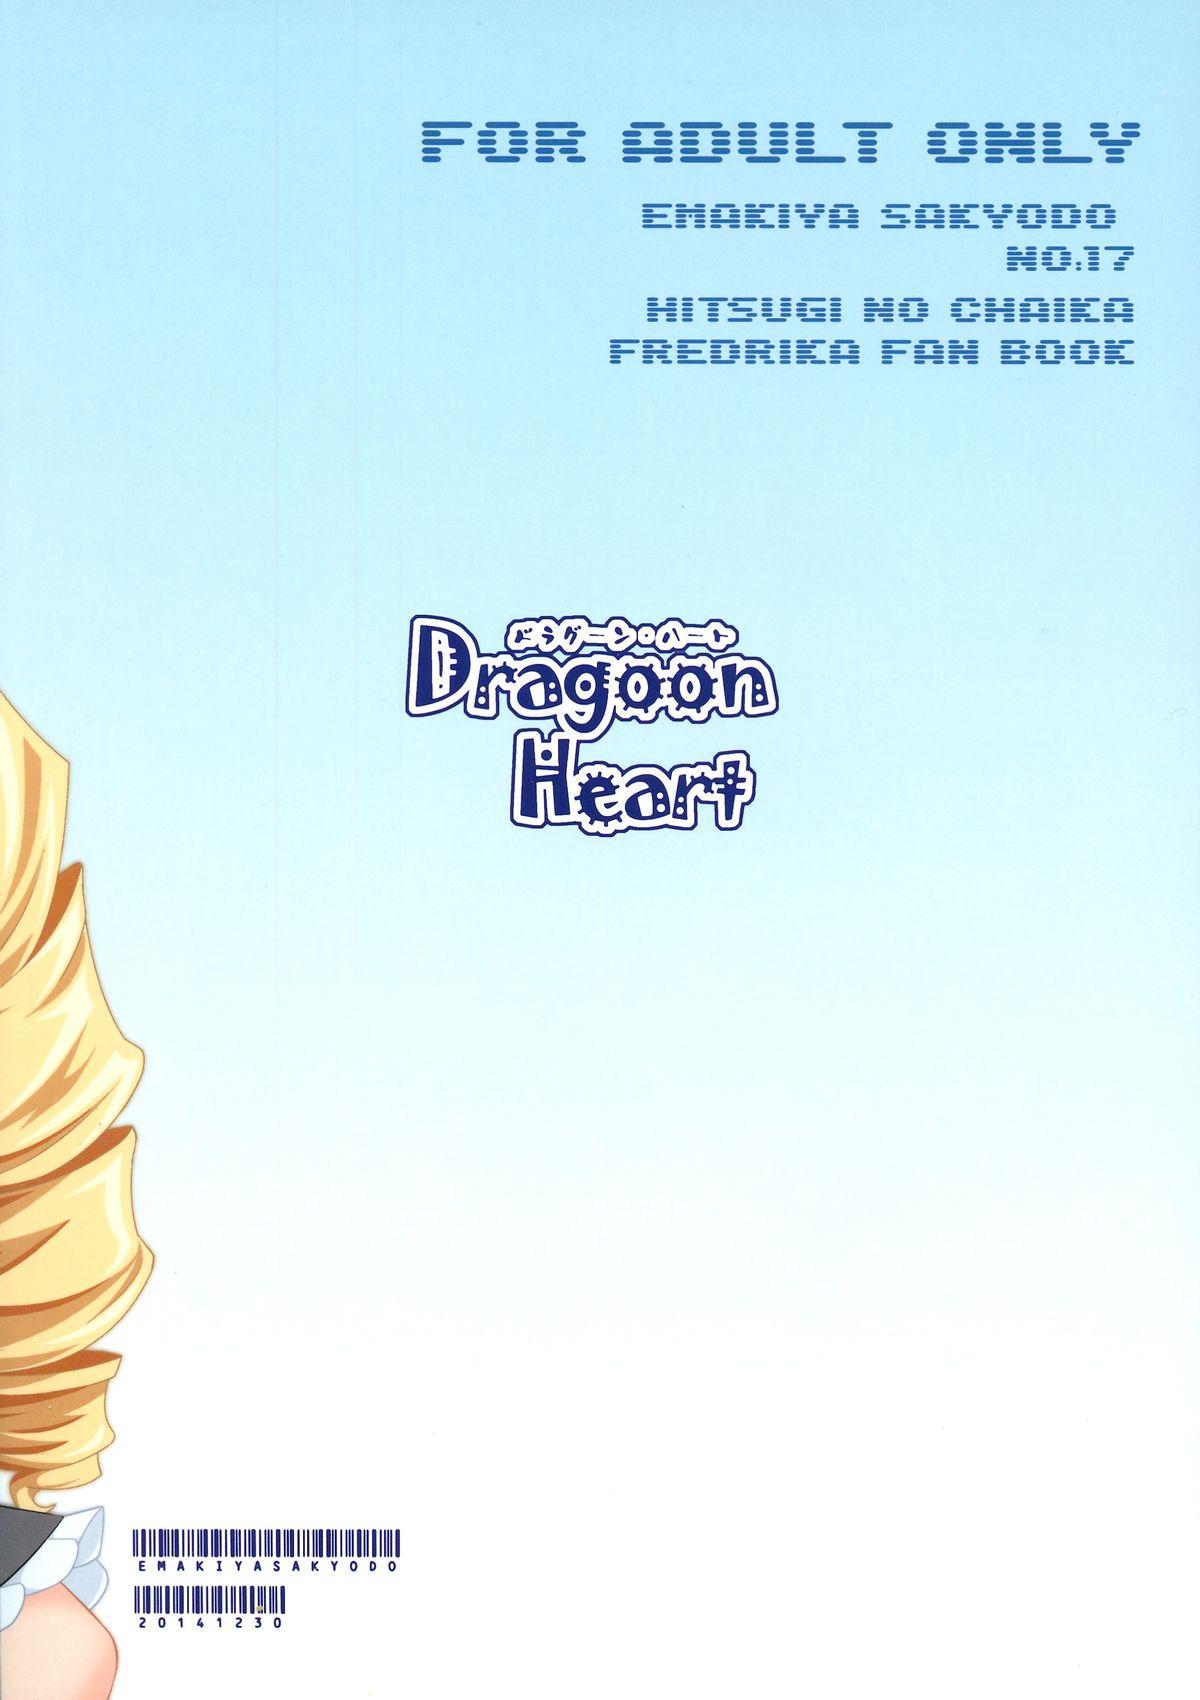 Hidden Camera Dragoon Heart - Hitsugi no chaika Fuck For Cash - Page 2